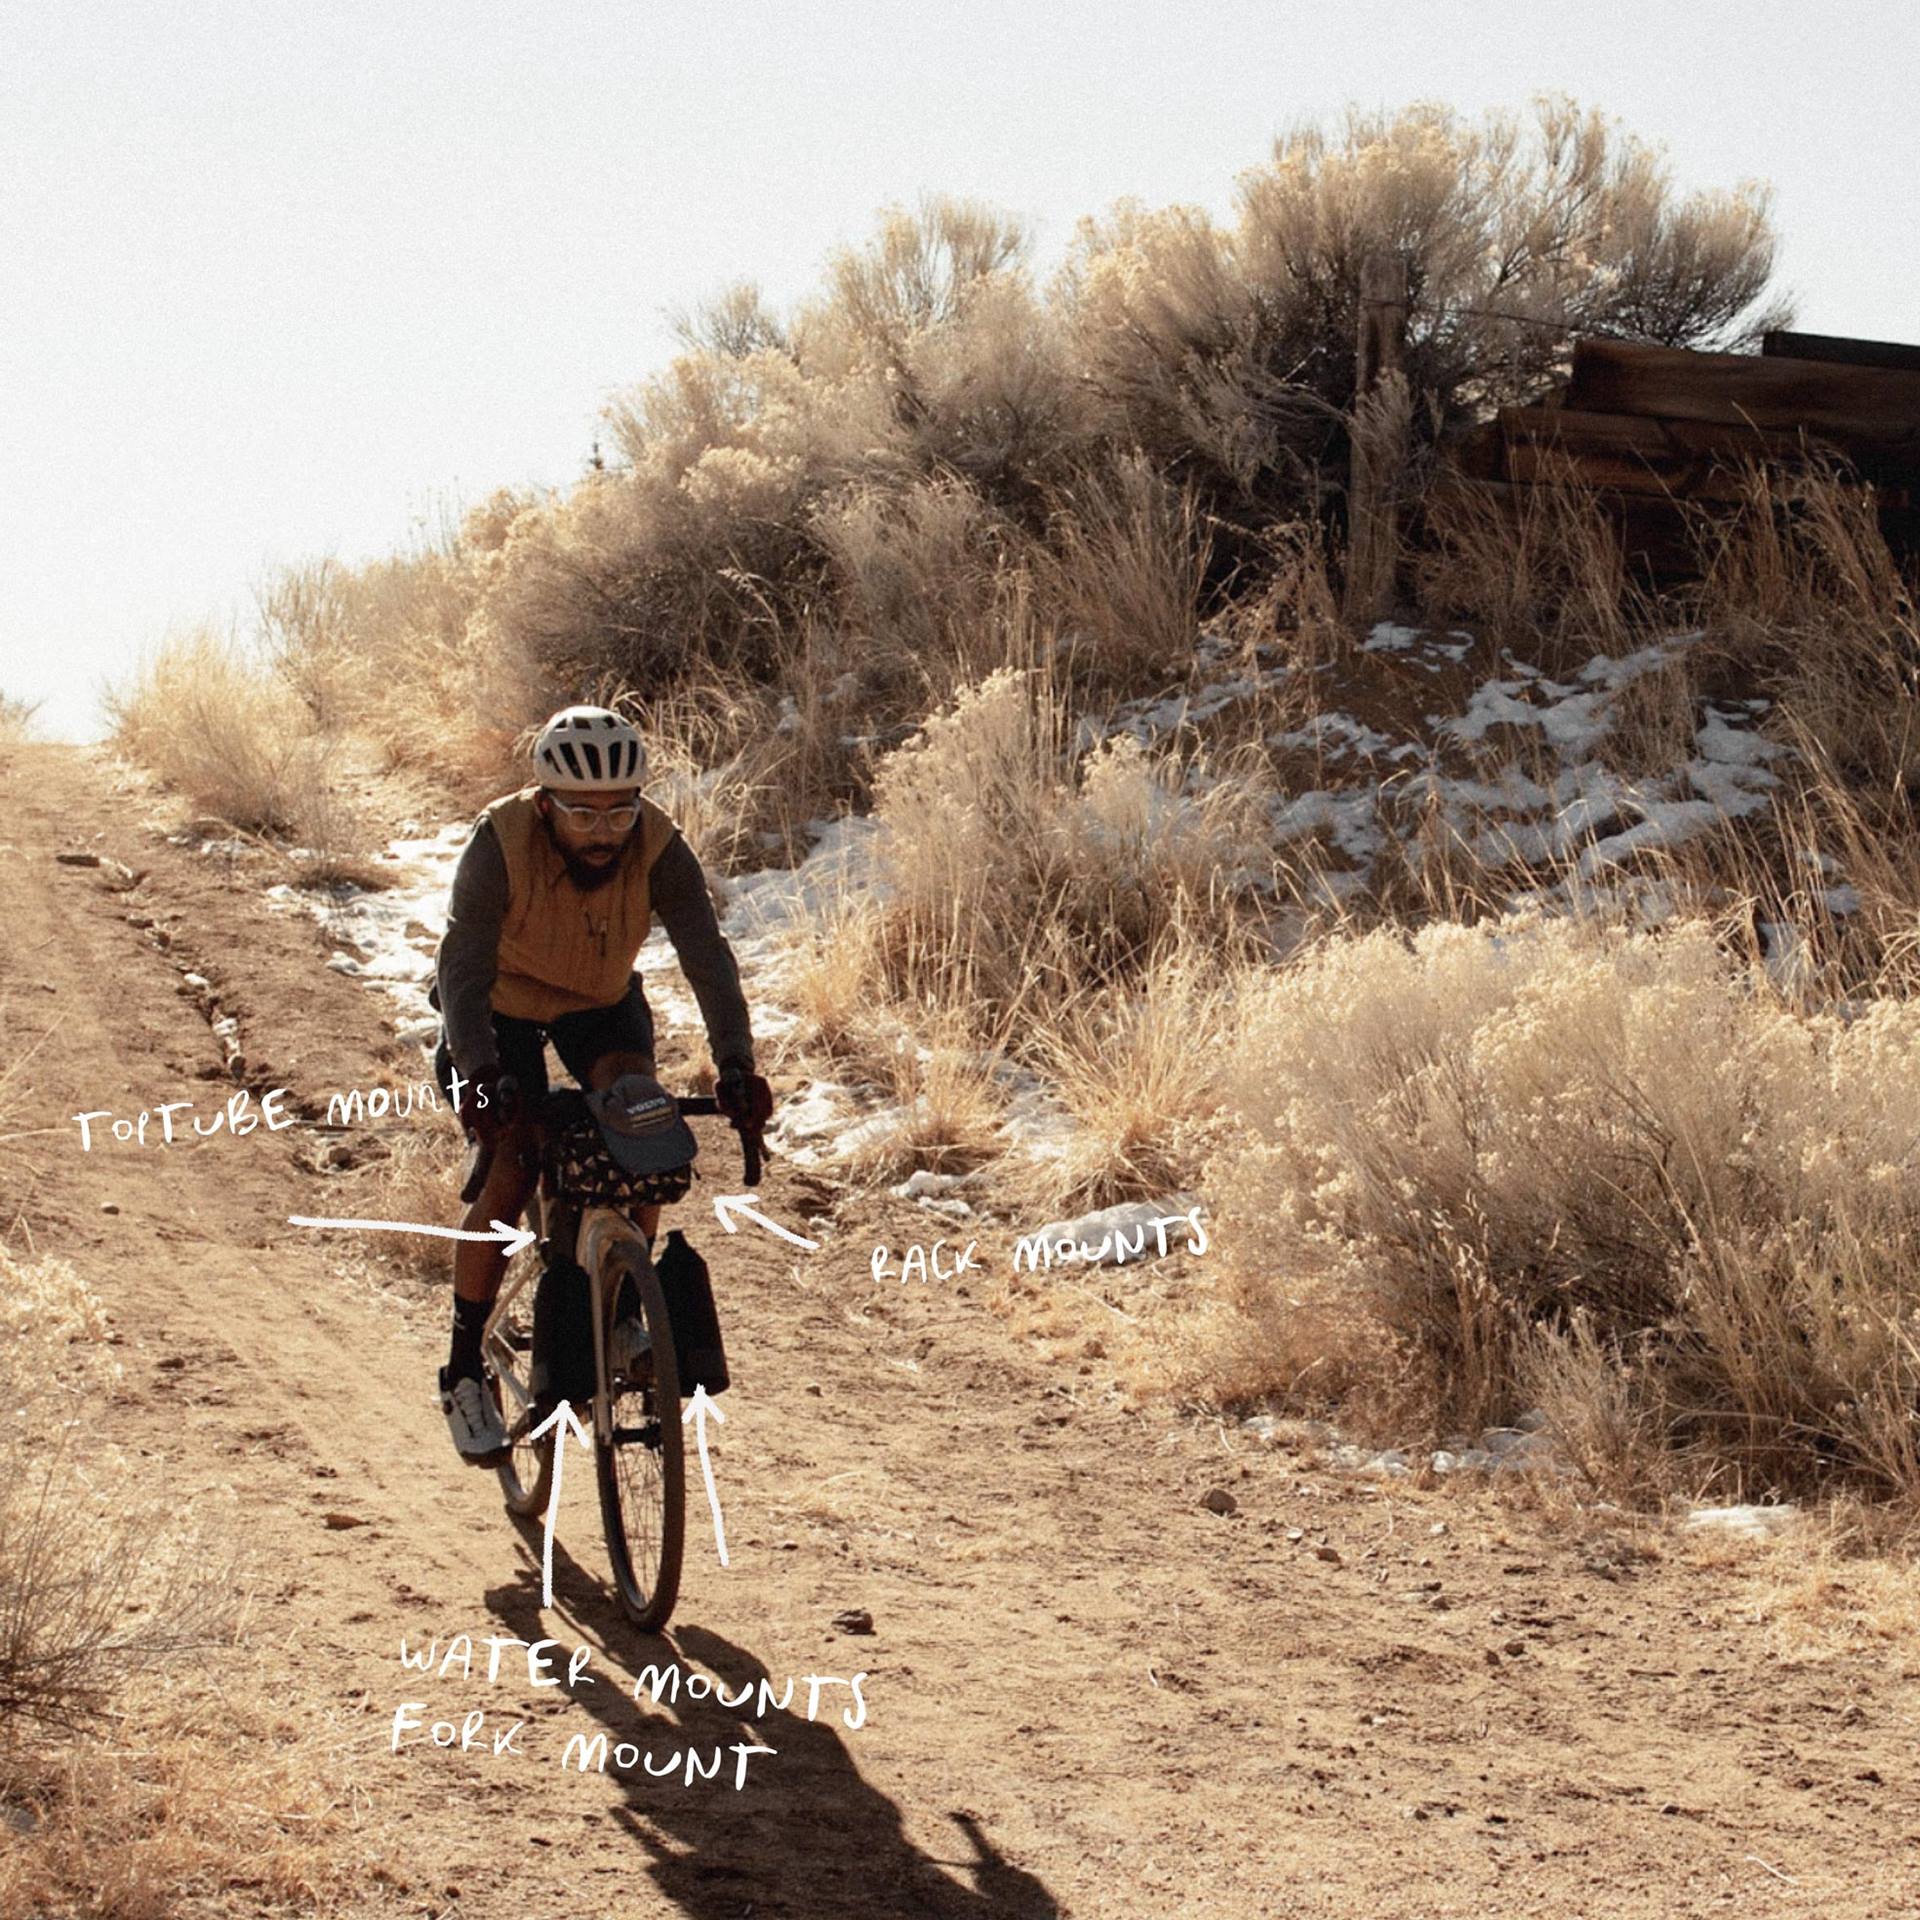 a man riding a bike on a dirt path in the desert